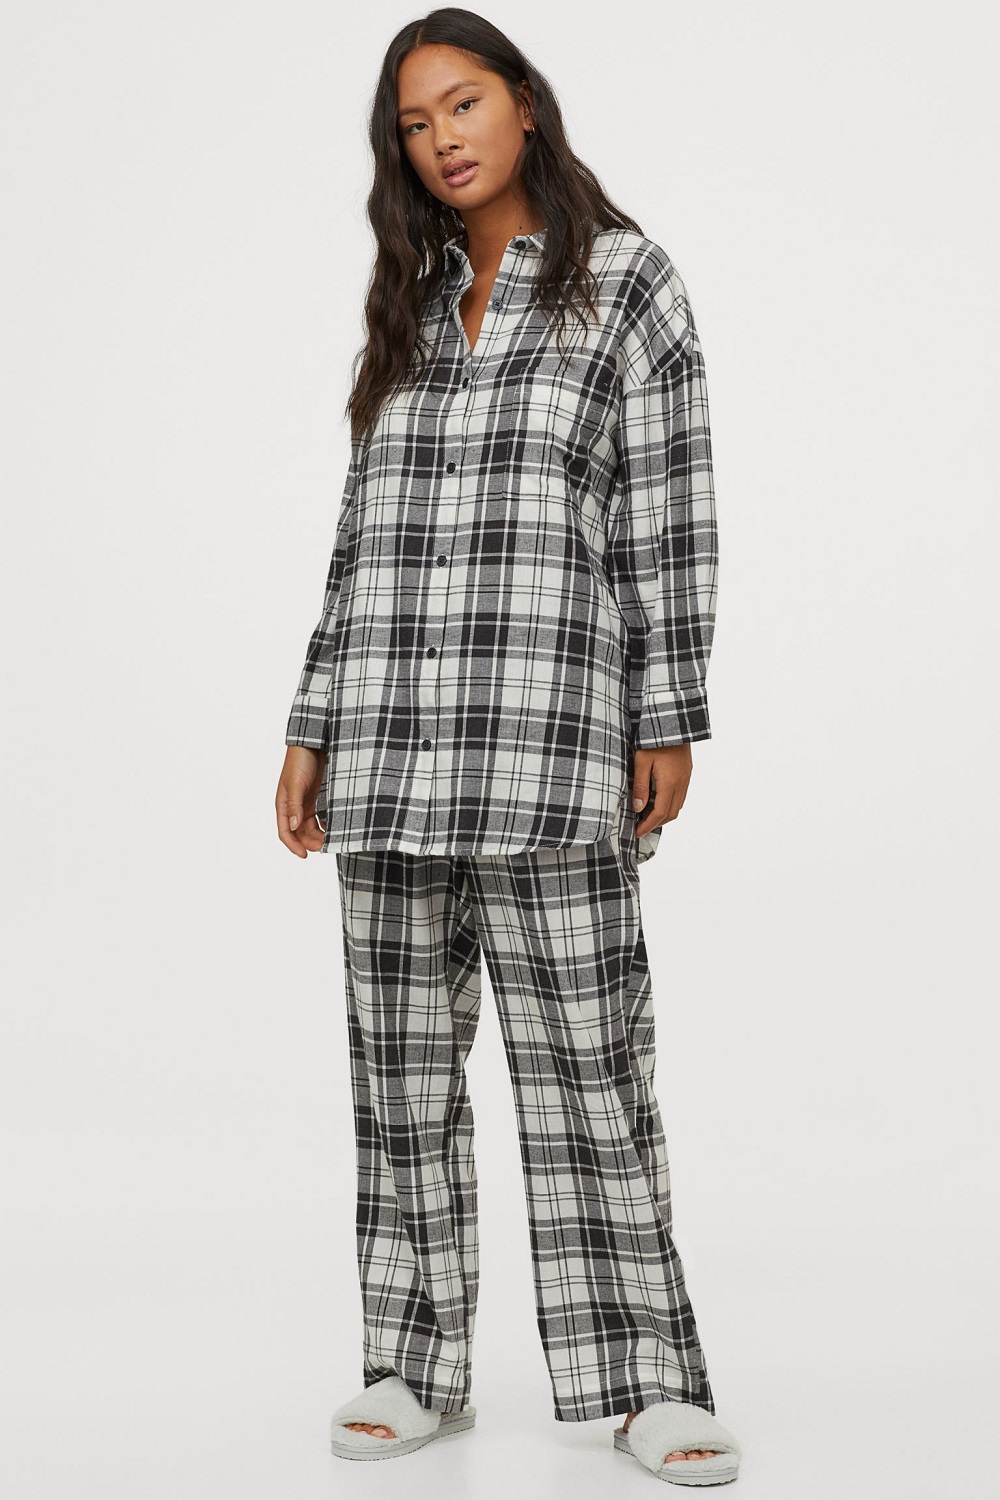 H&M tople pidžame zima 2020.